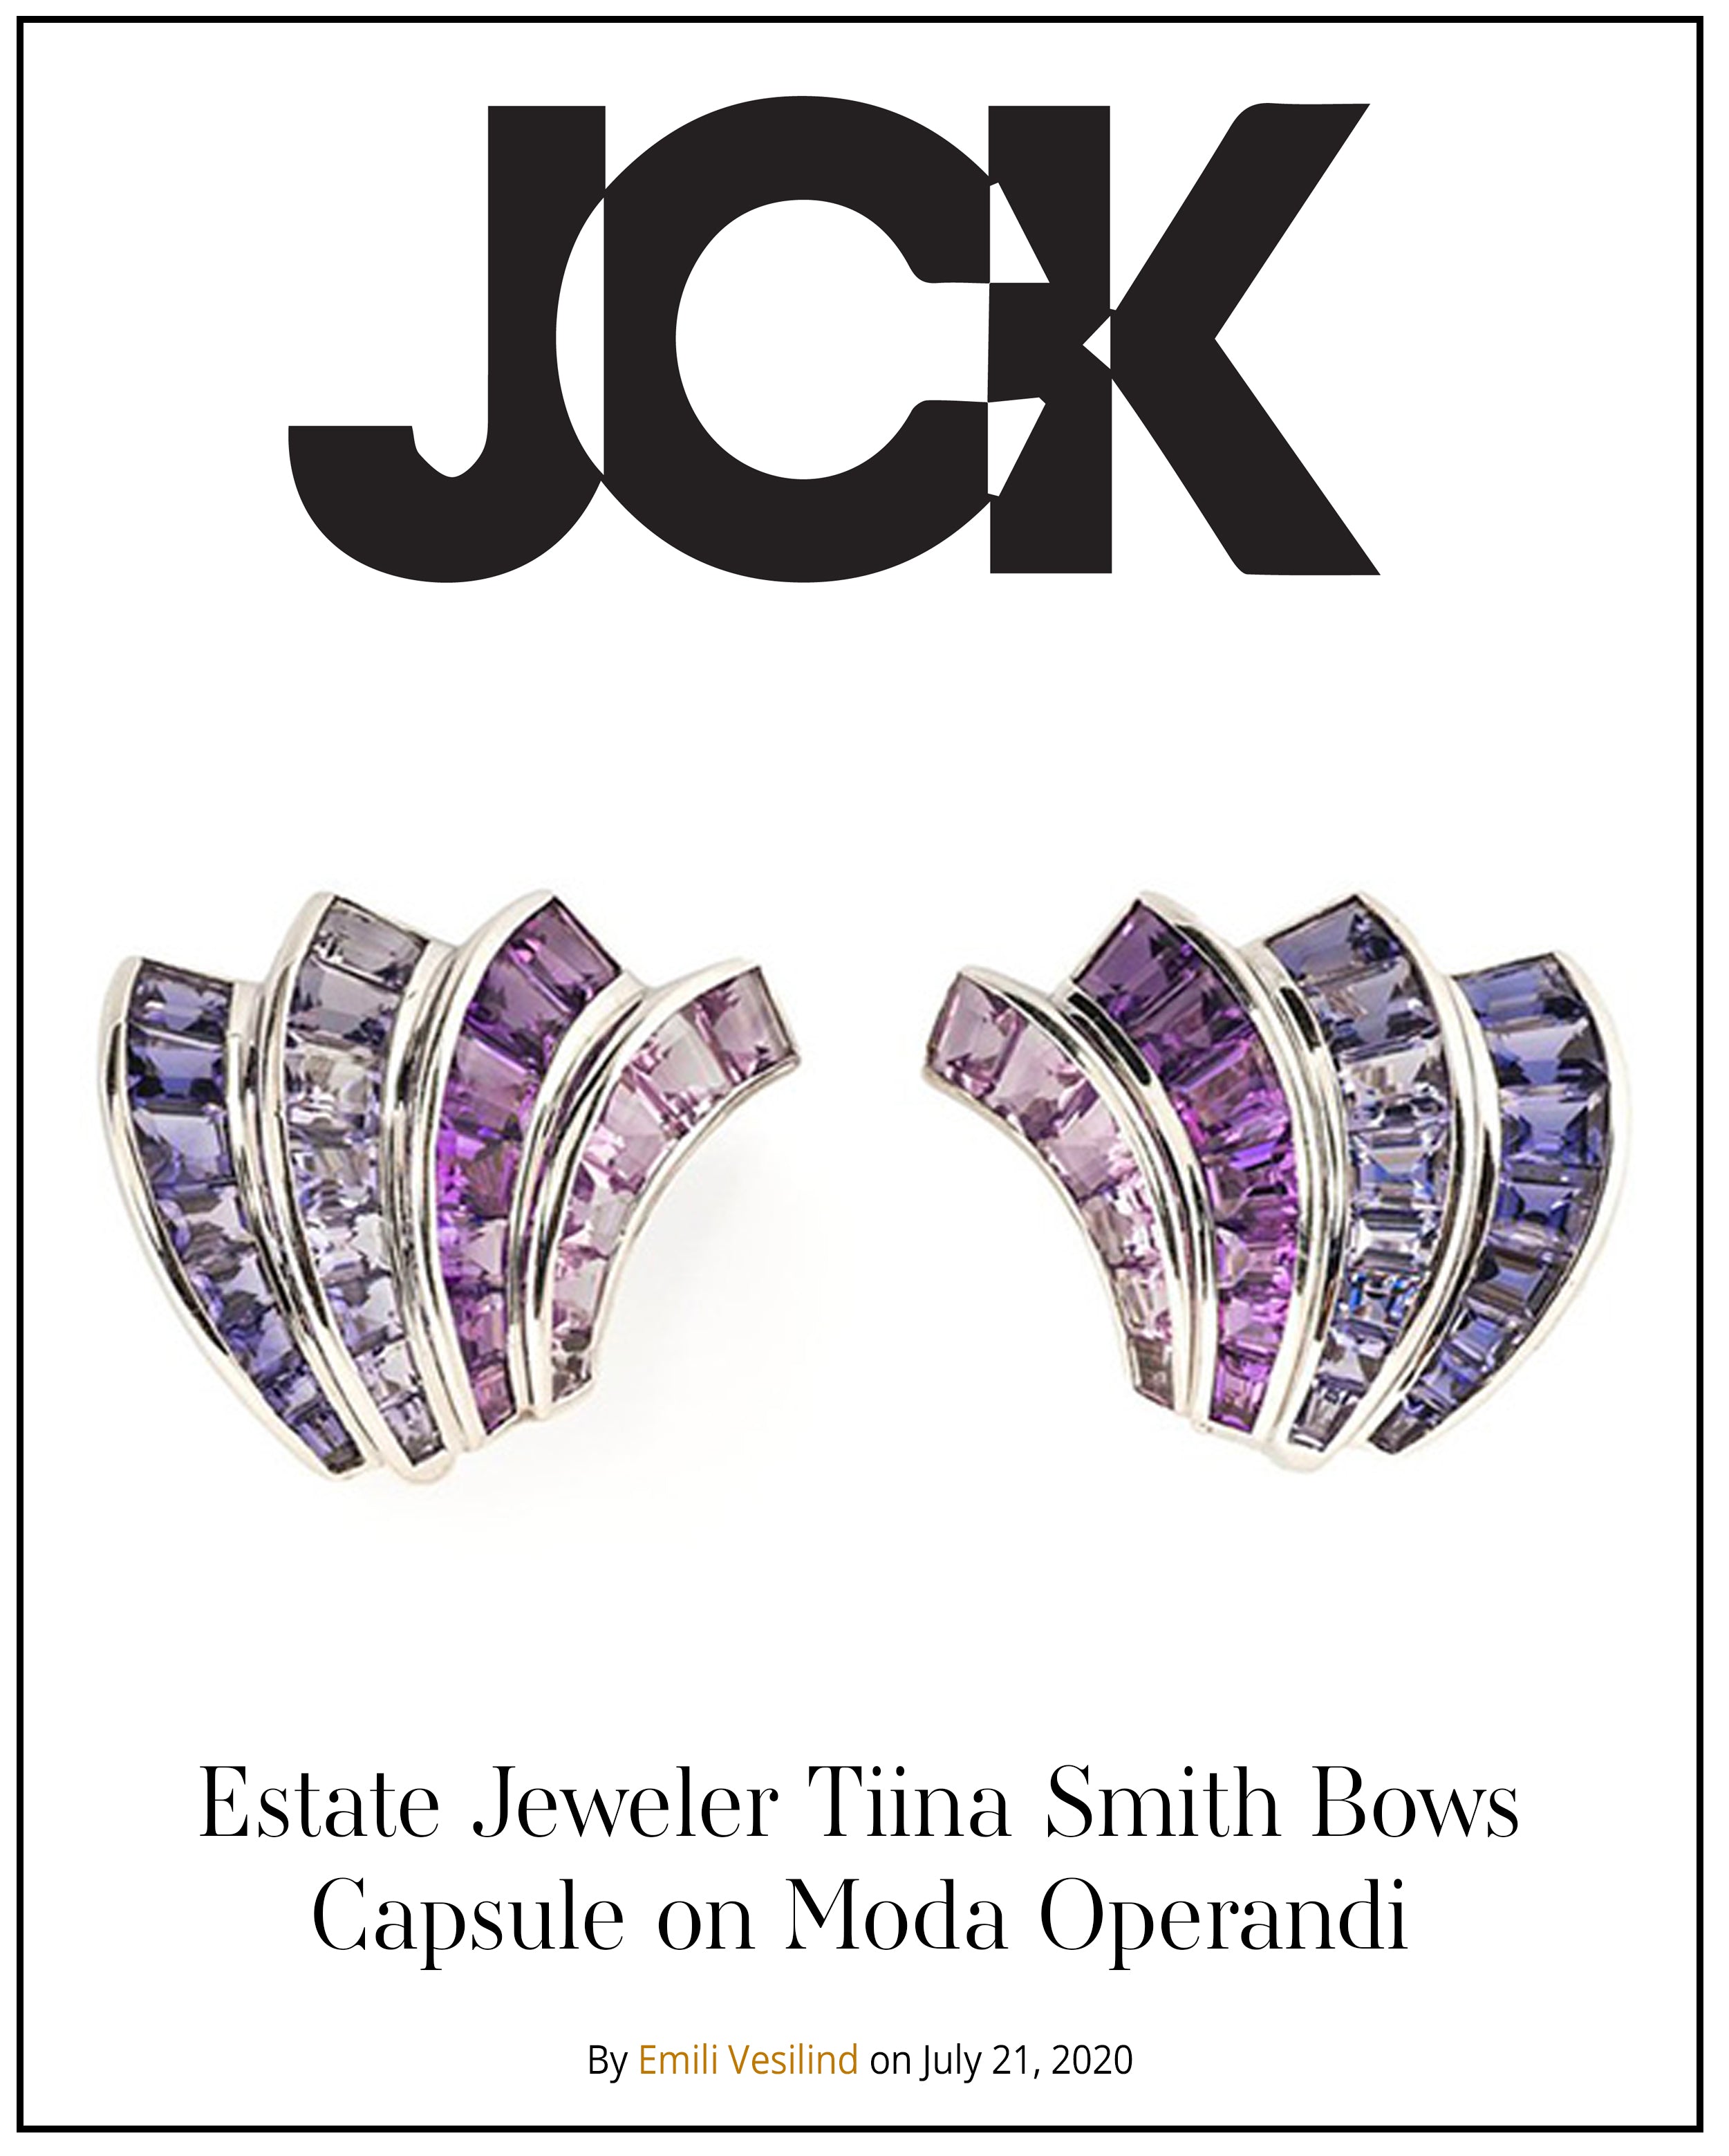 Estate Jeweler Tiina Smith Bows Capsule on Moda Operandi